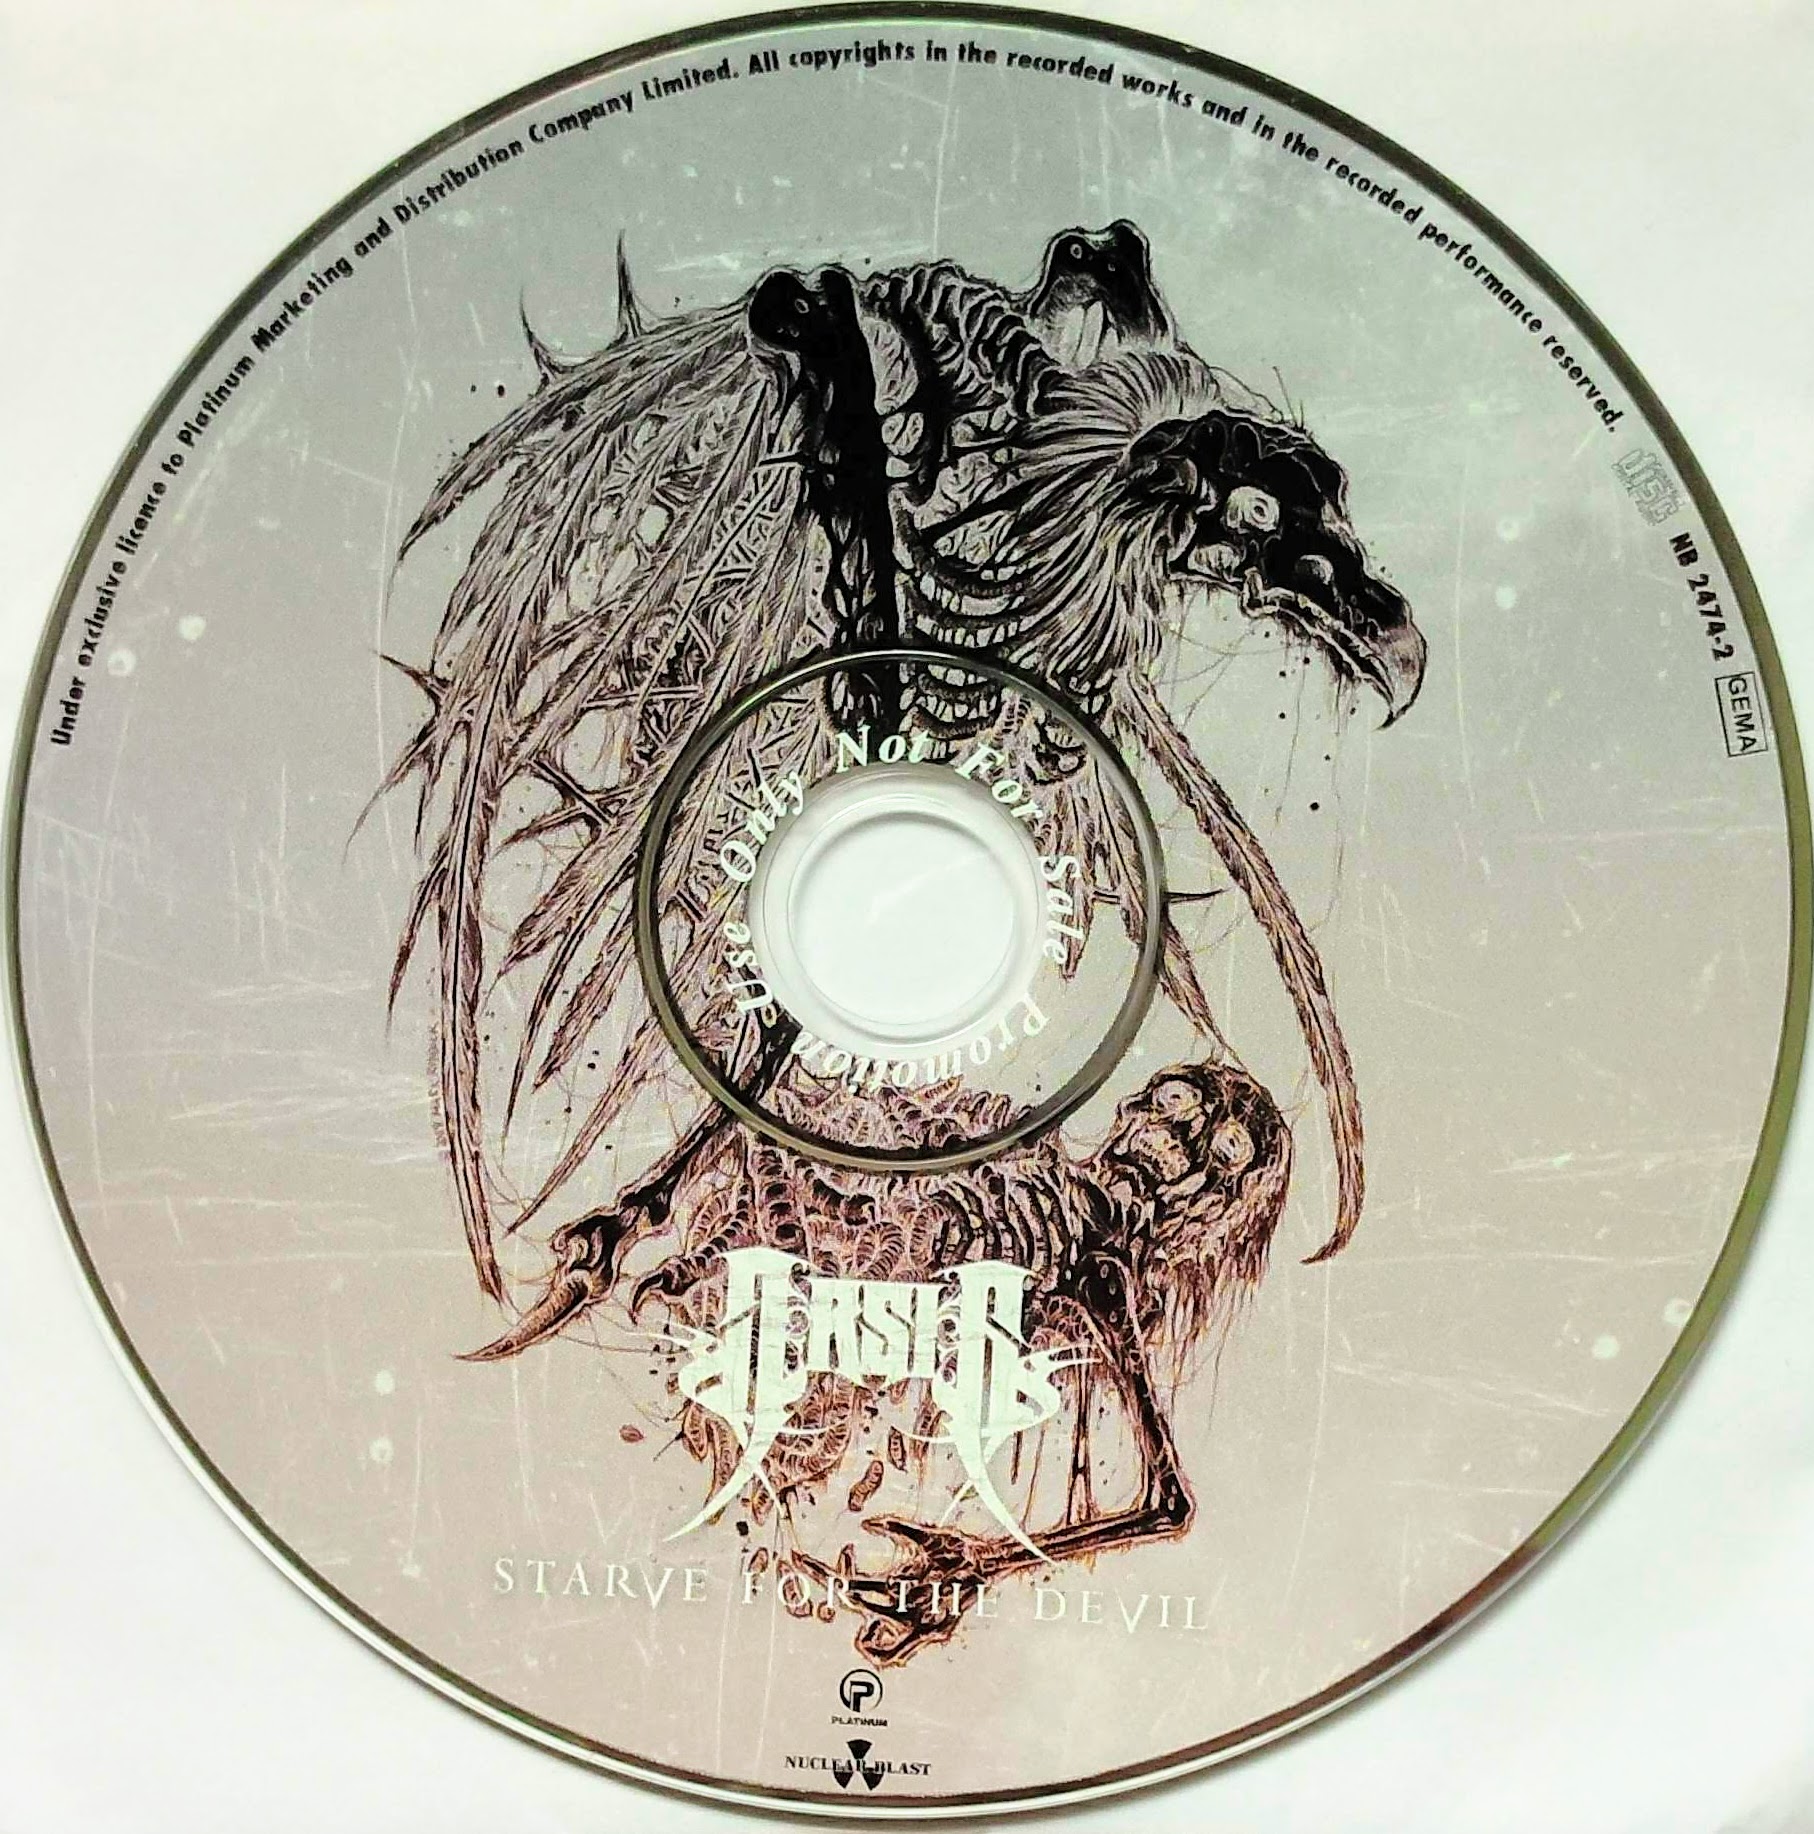 CD (Promotion) Arsis - Starve For The Devil (CD Only)